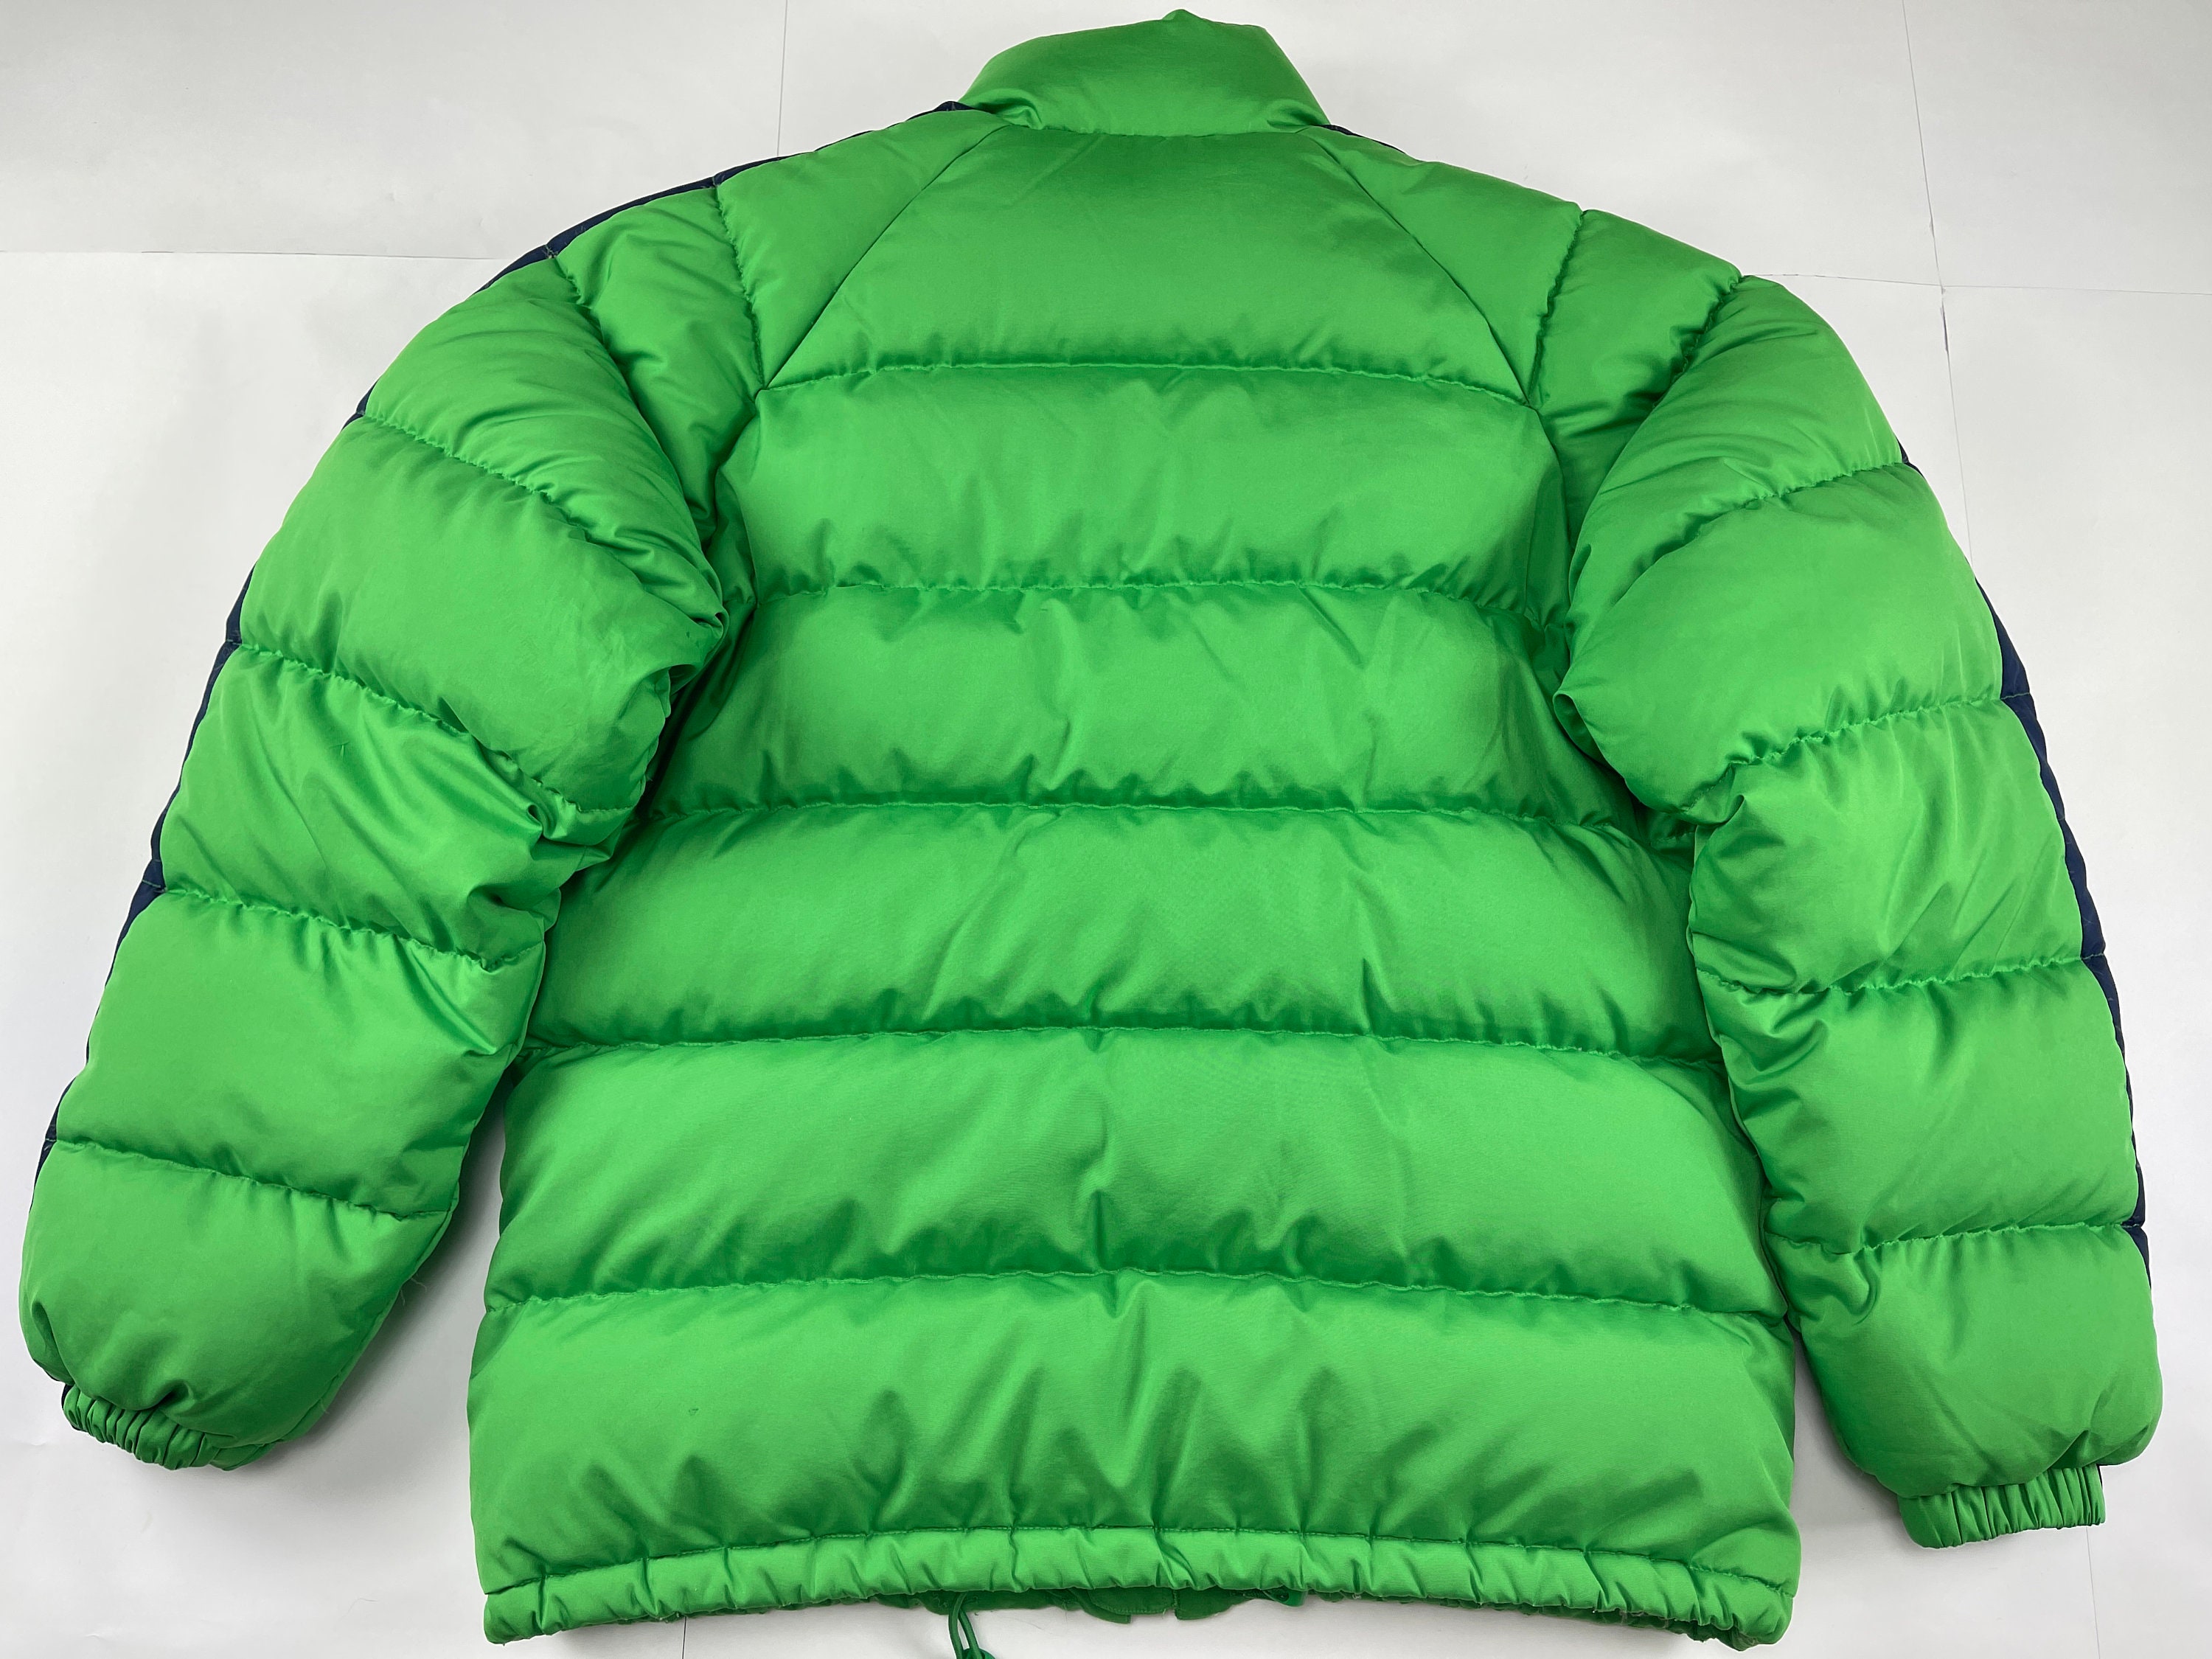 FILA jacket green down vintage puffer jacket 90s hip hop | Etsy